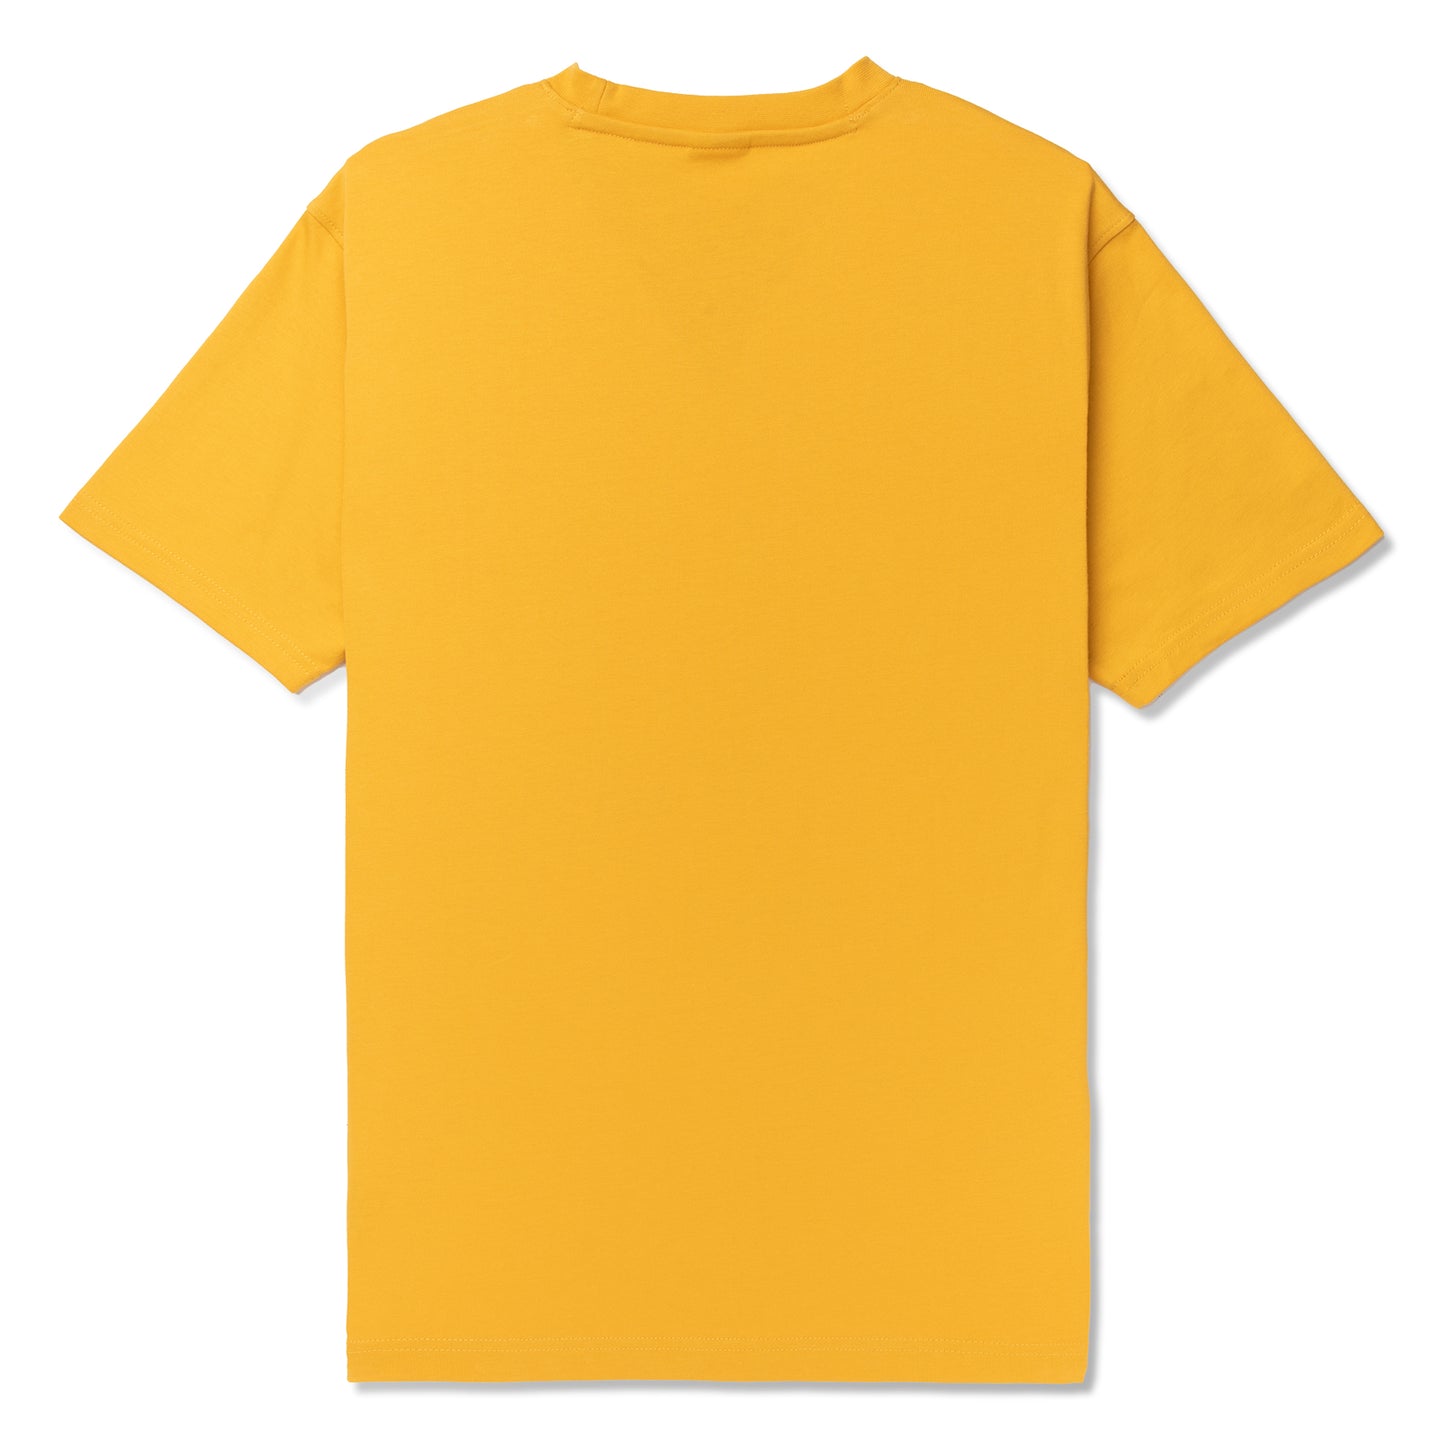 New Balance x Joe Freshgoods T-Shirt (Aspen)